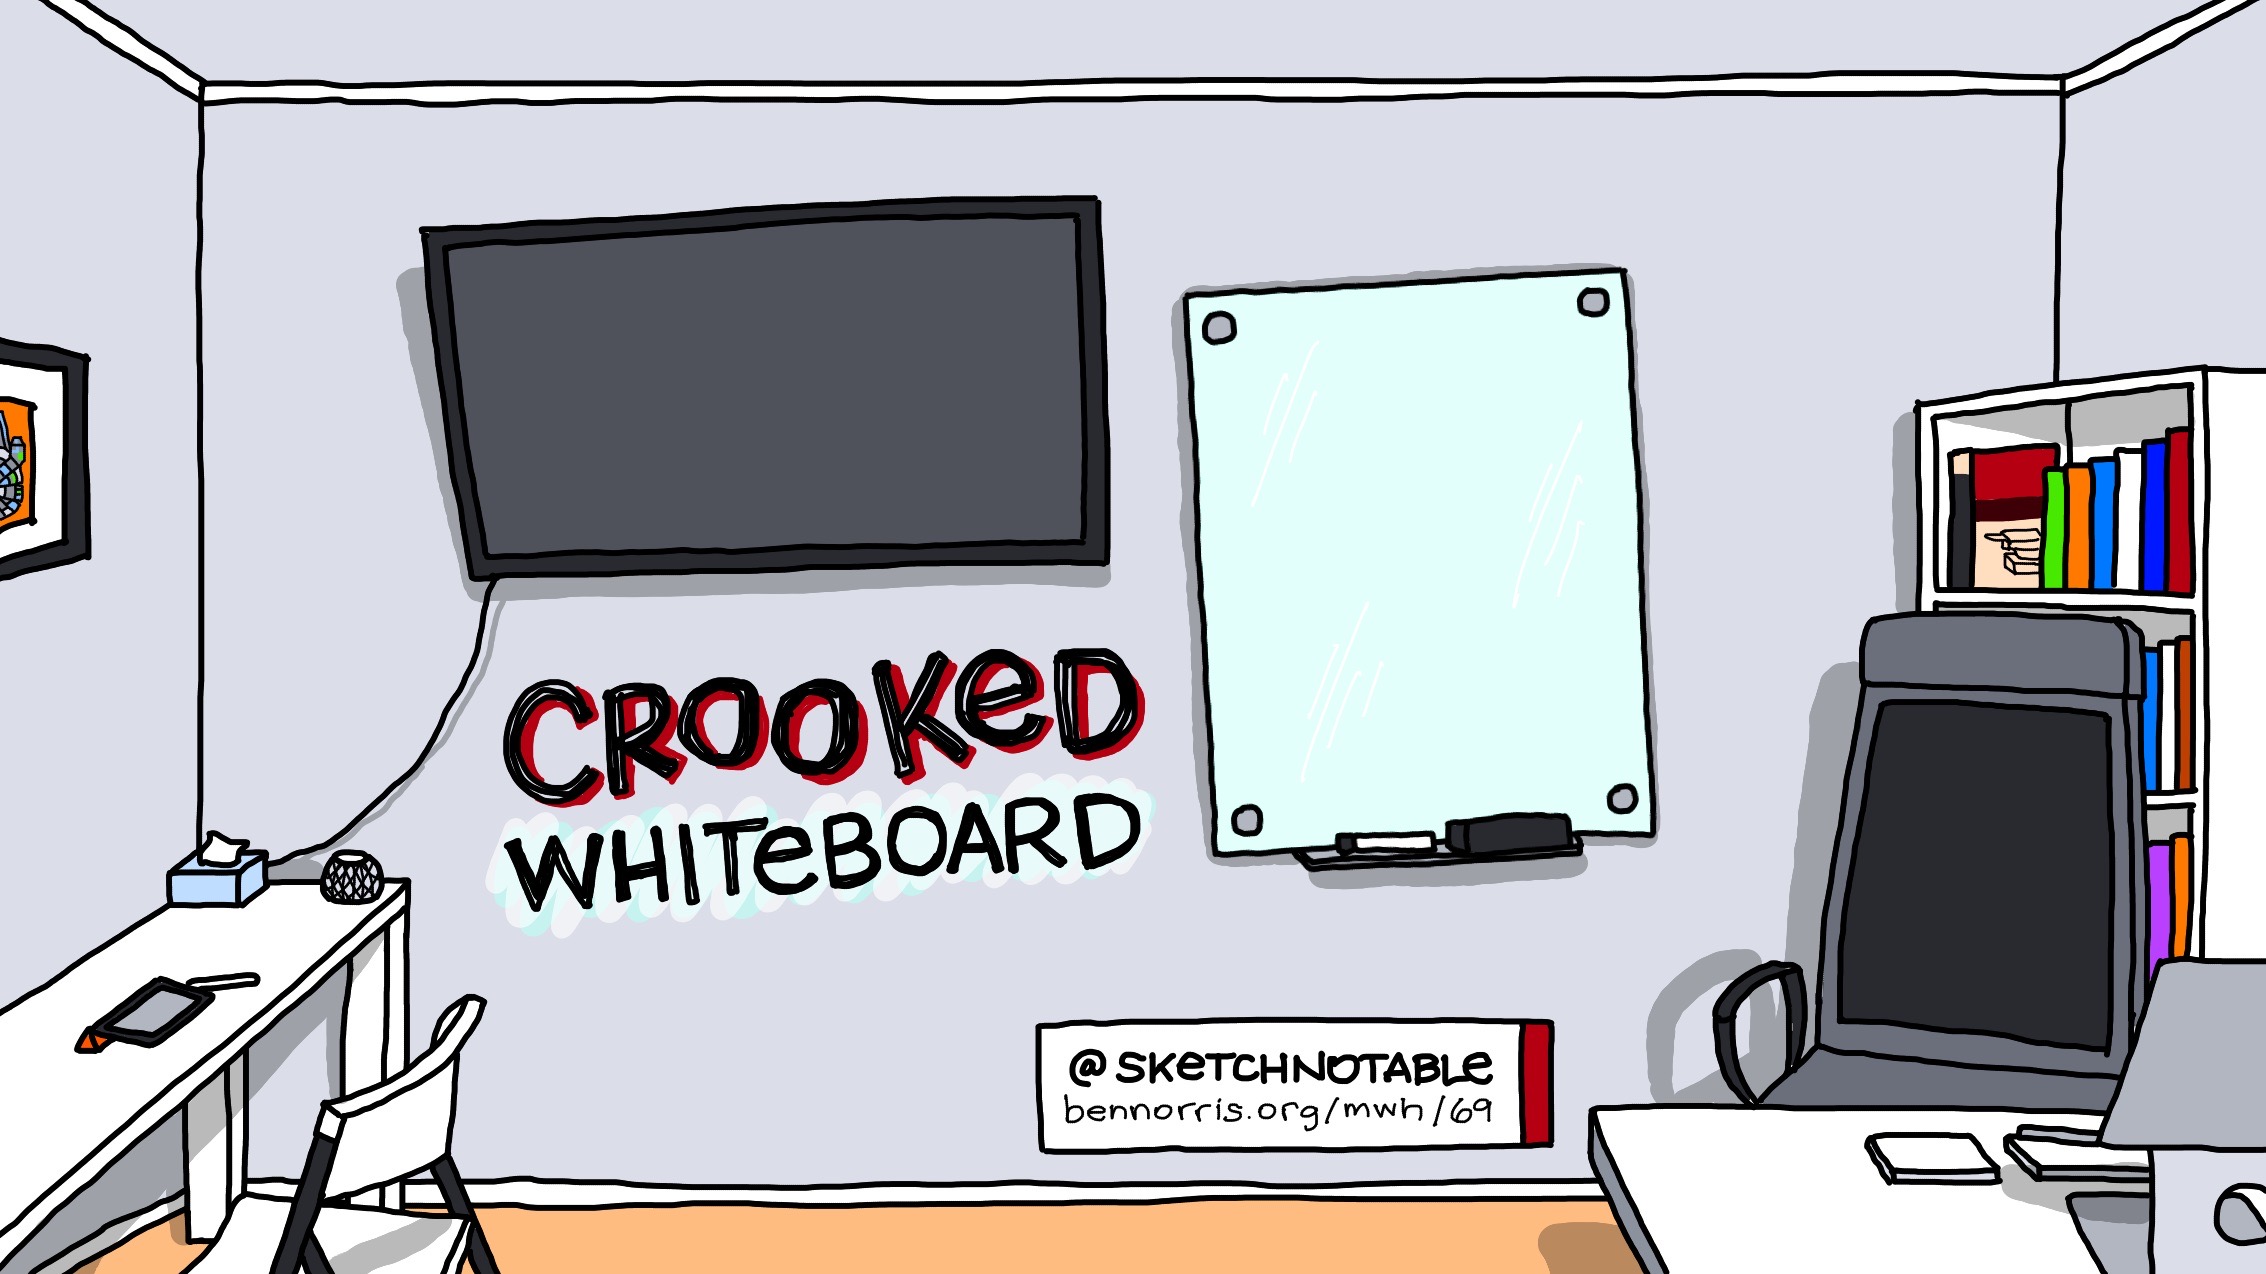 #69: Crooked whiteboard